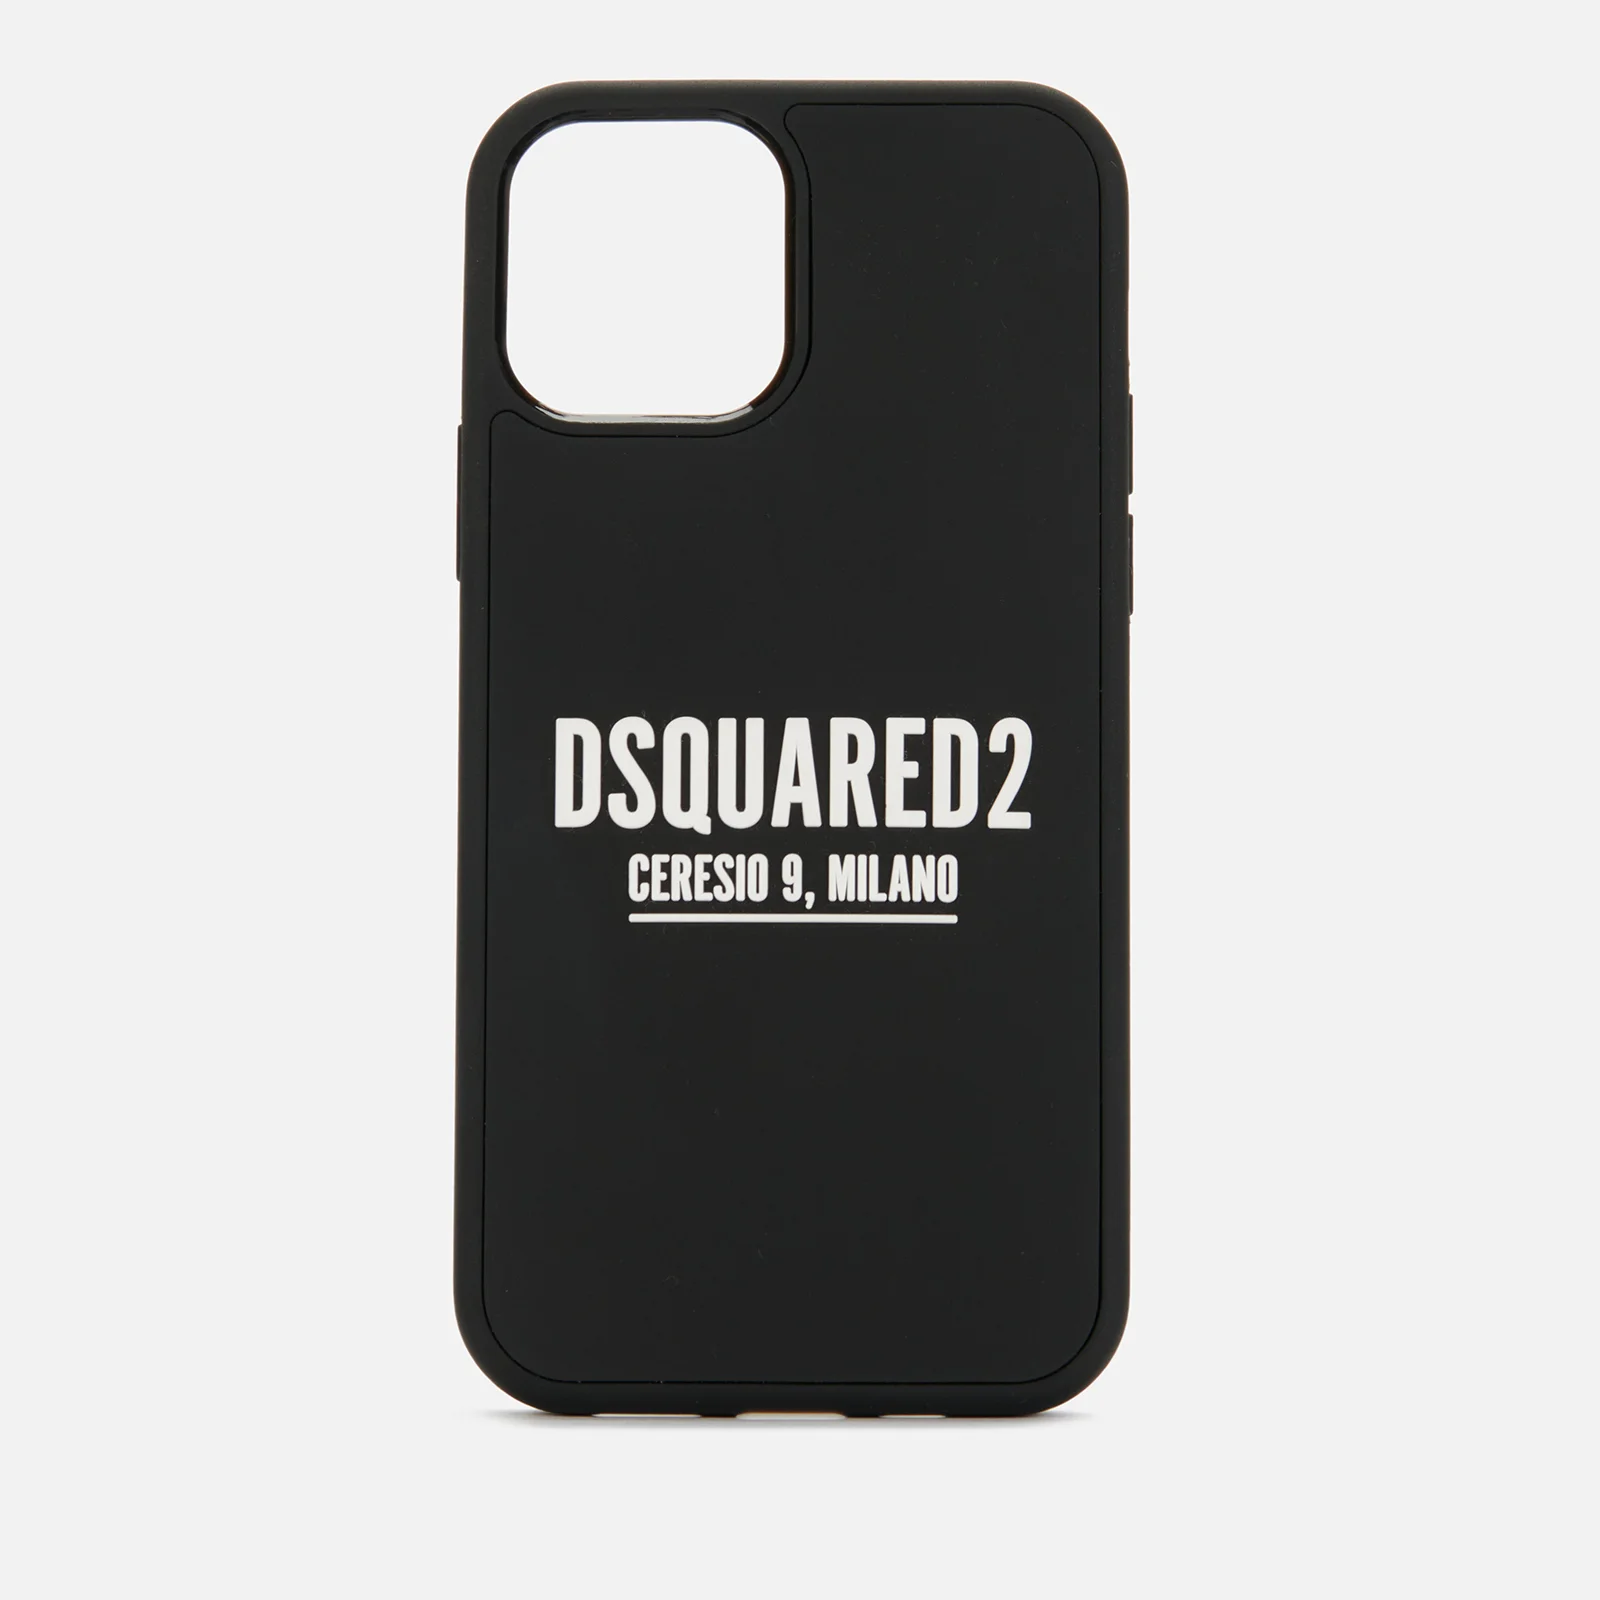 Dsquared2 Men's Iphone 12 Pro Phone Case - Black Image 1